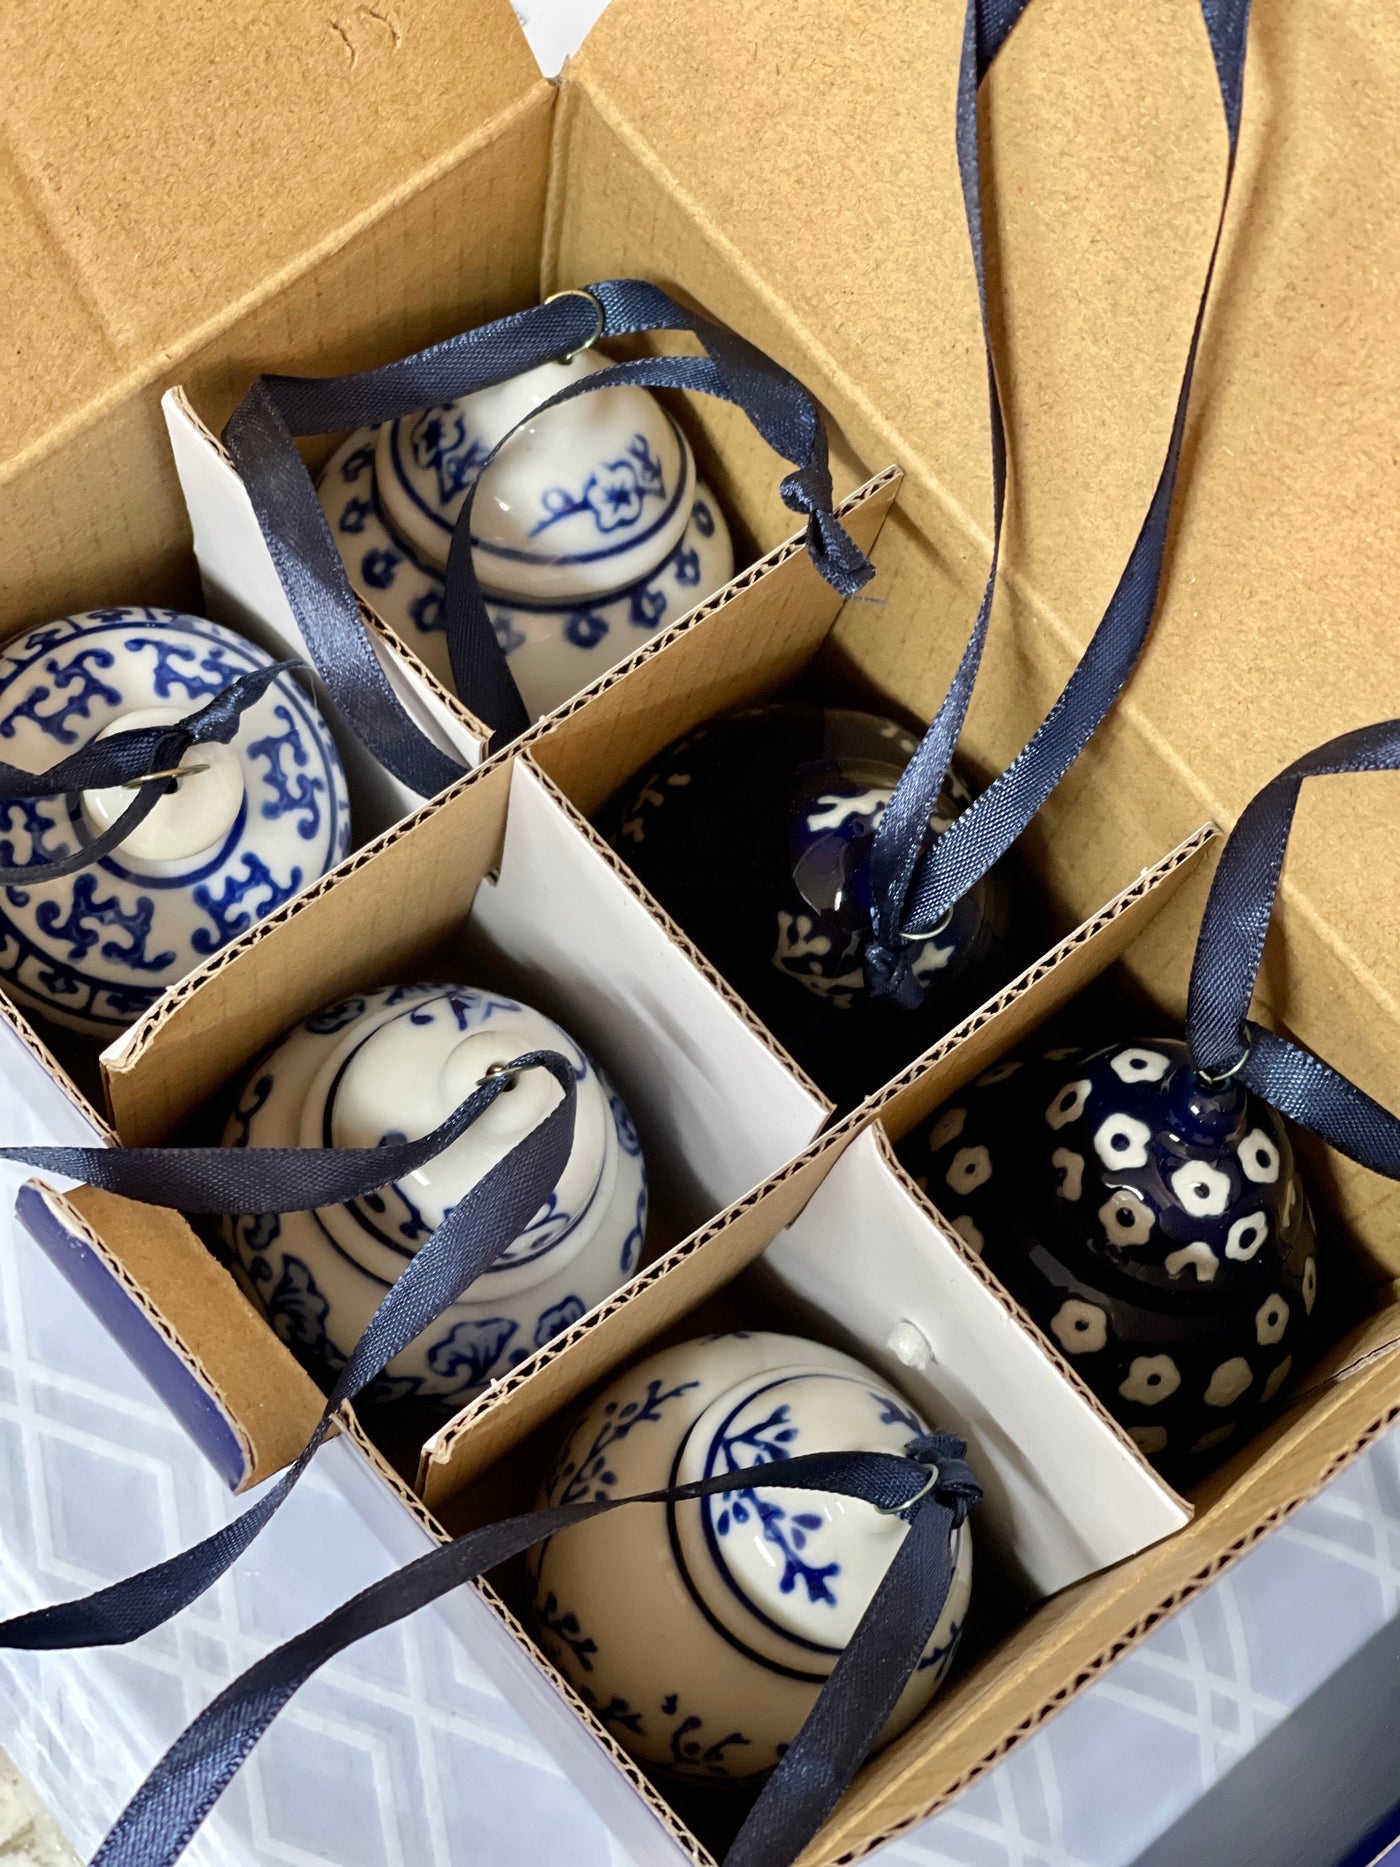 Set of Six Ceramic Mini Ginger Jar Ornaments - Blue and White